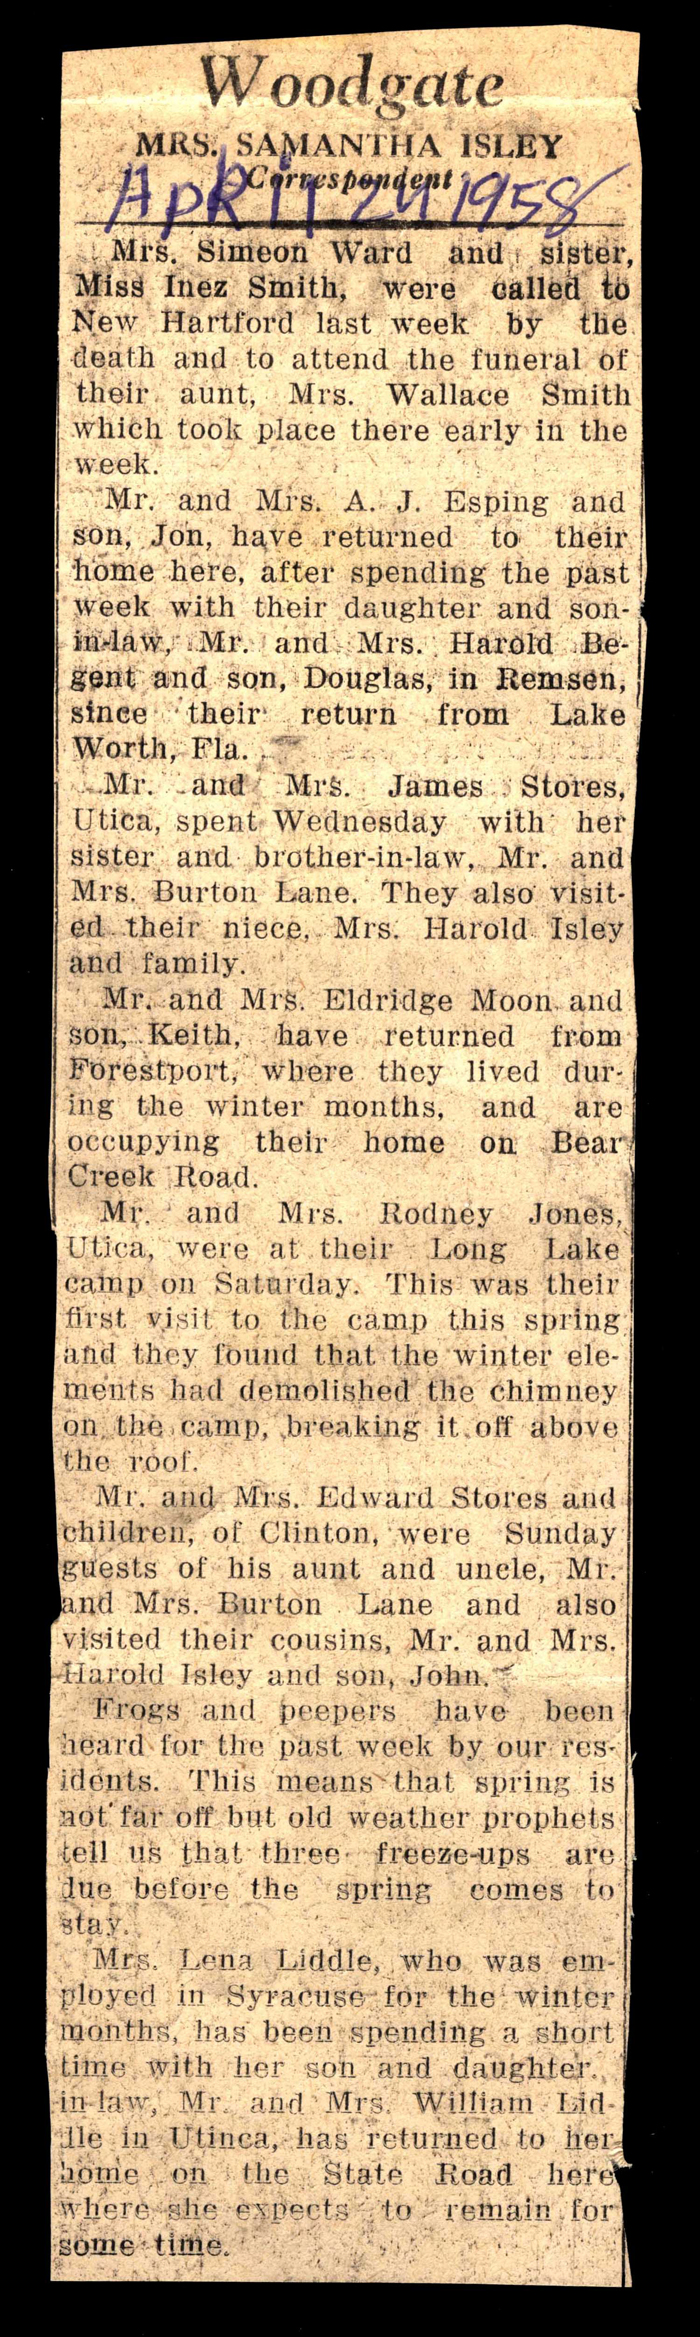 woodgate news april 24 1958